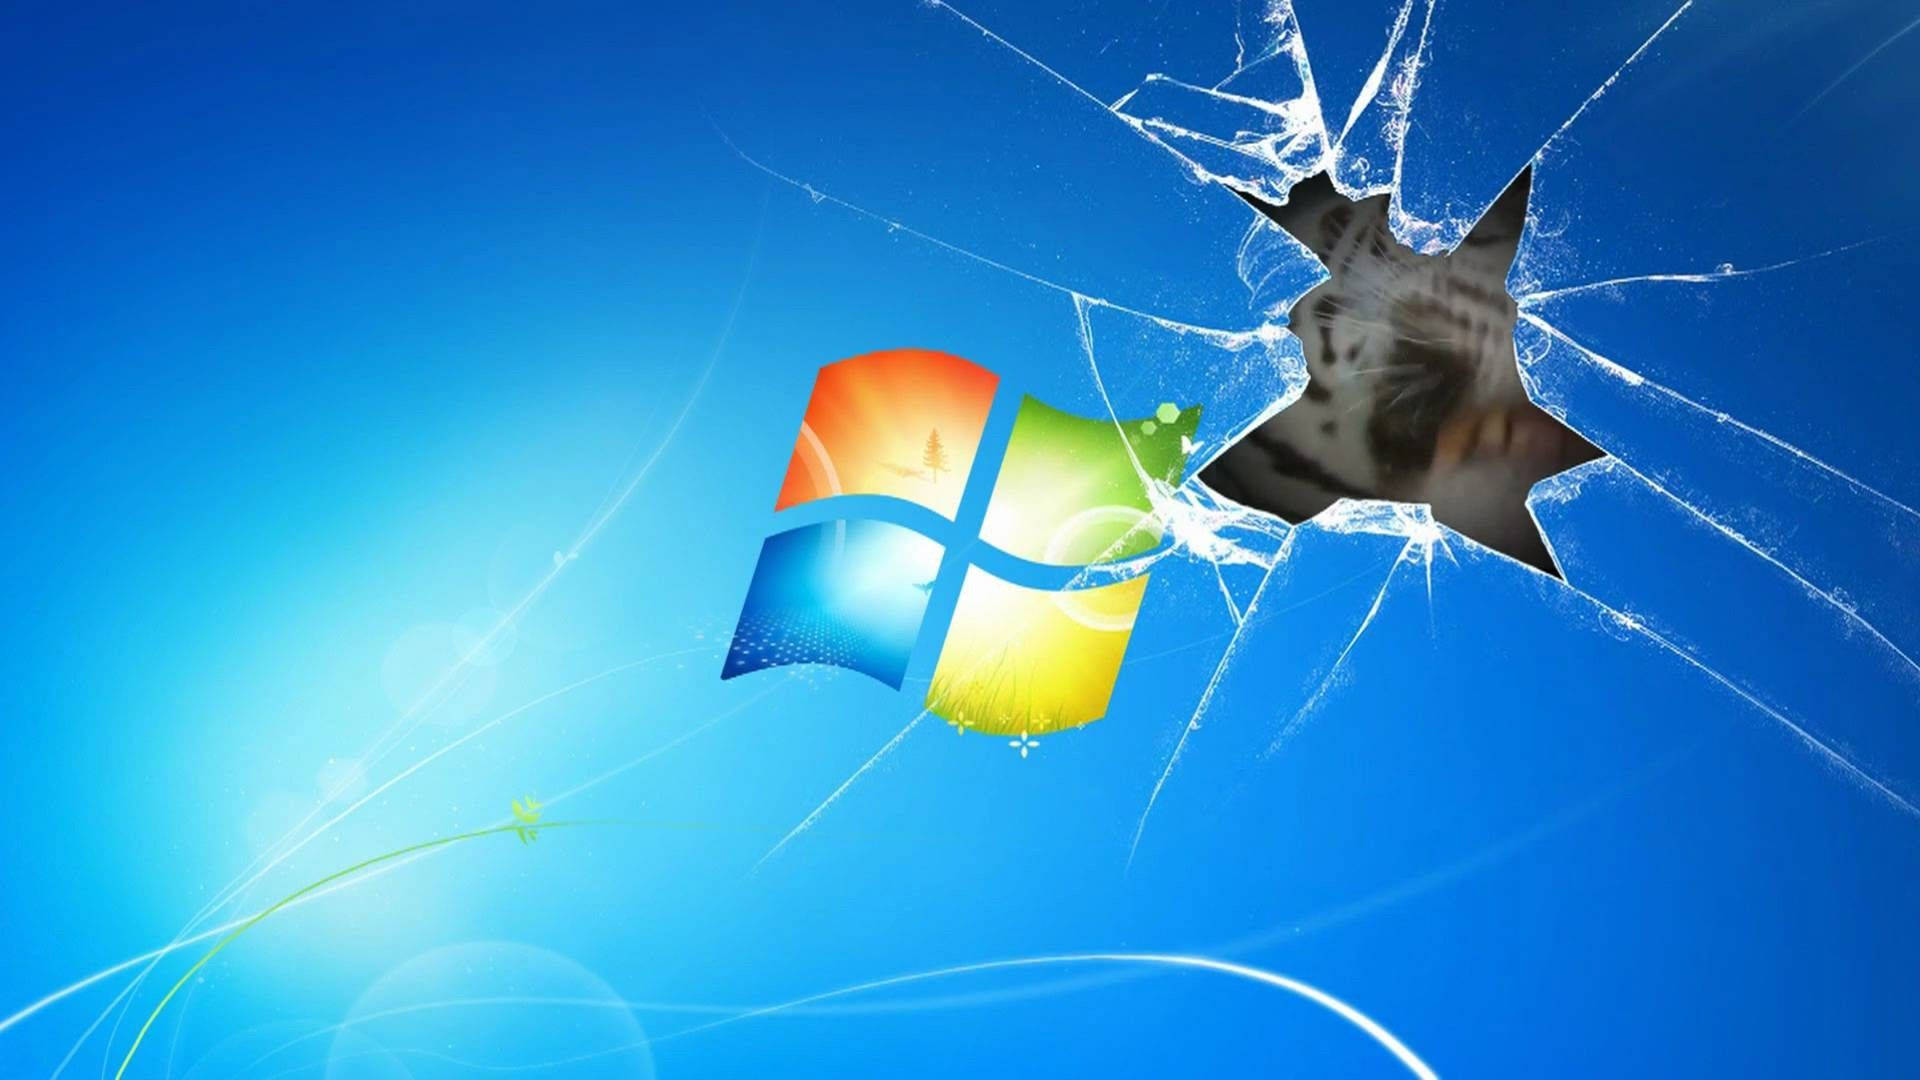 Download Windows 7 Animated Hd Wallpaper 